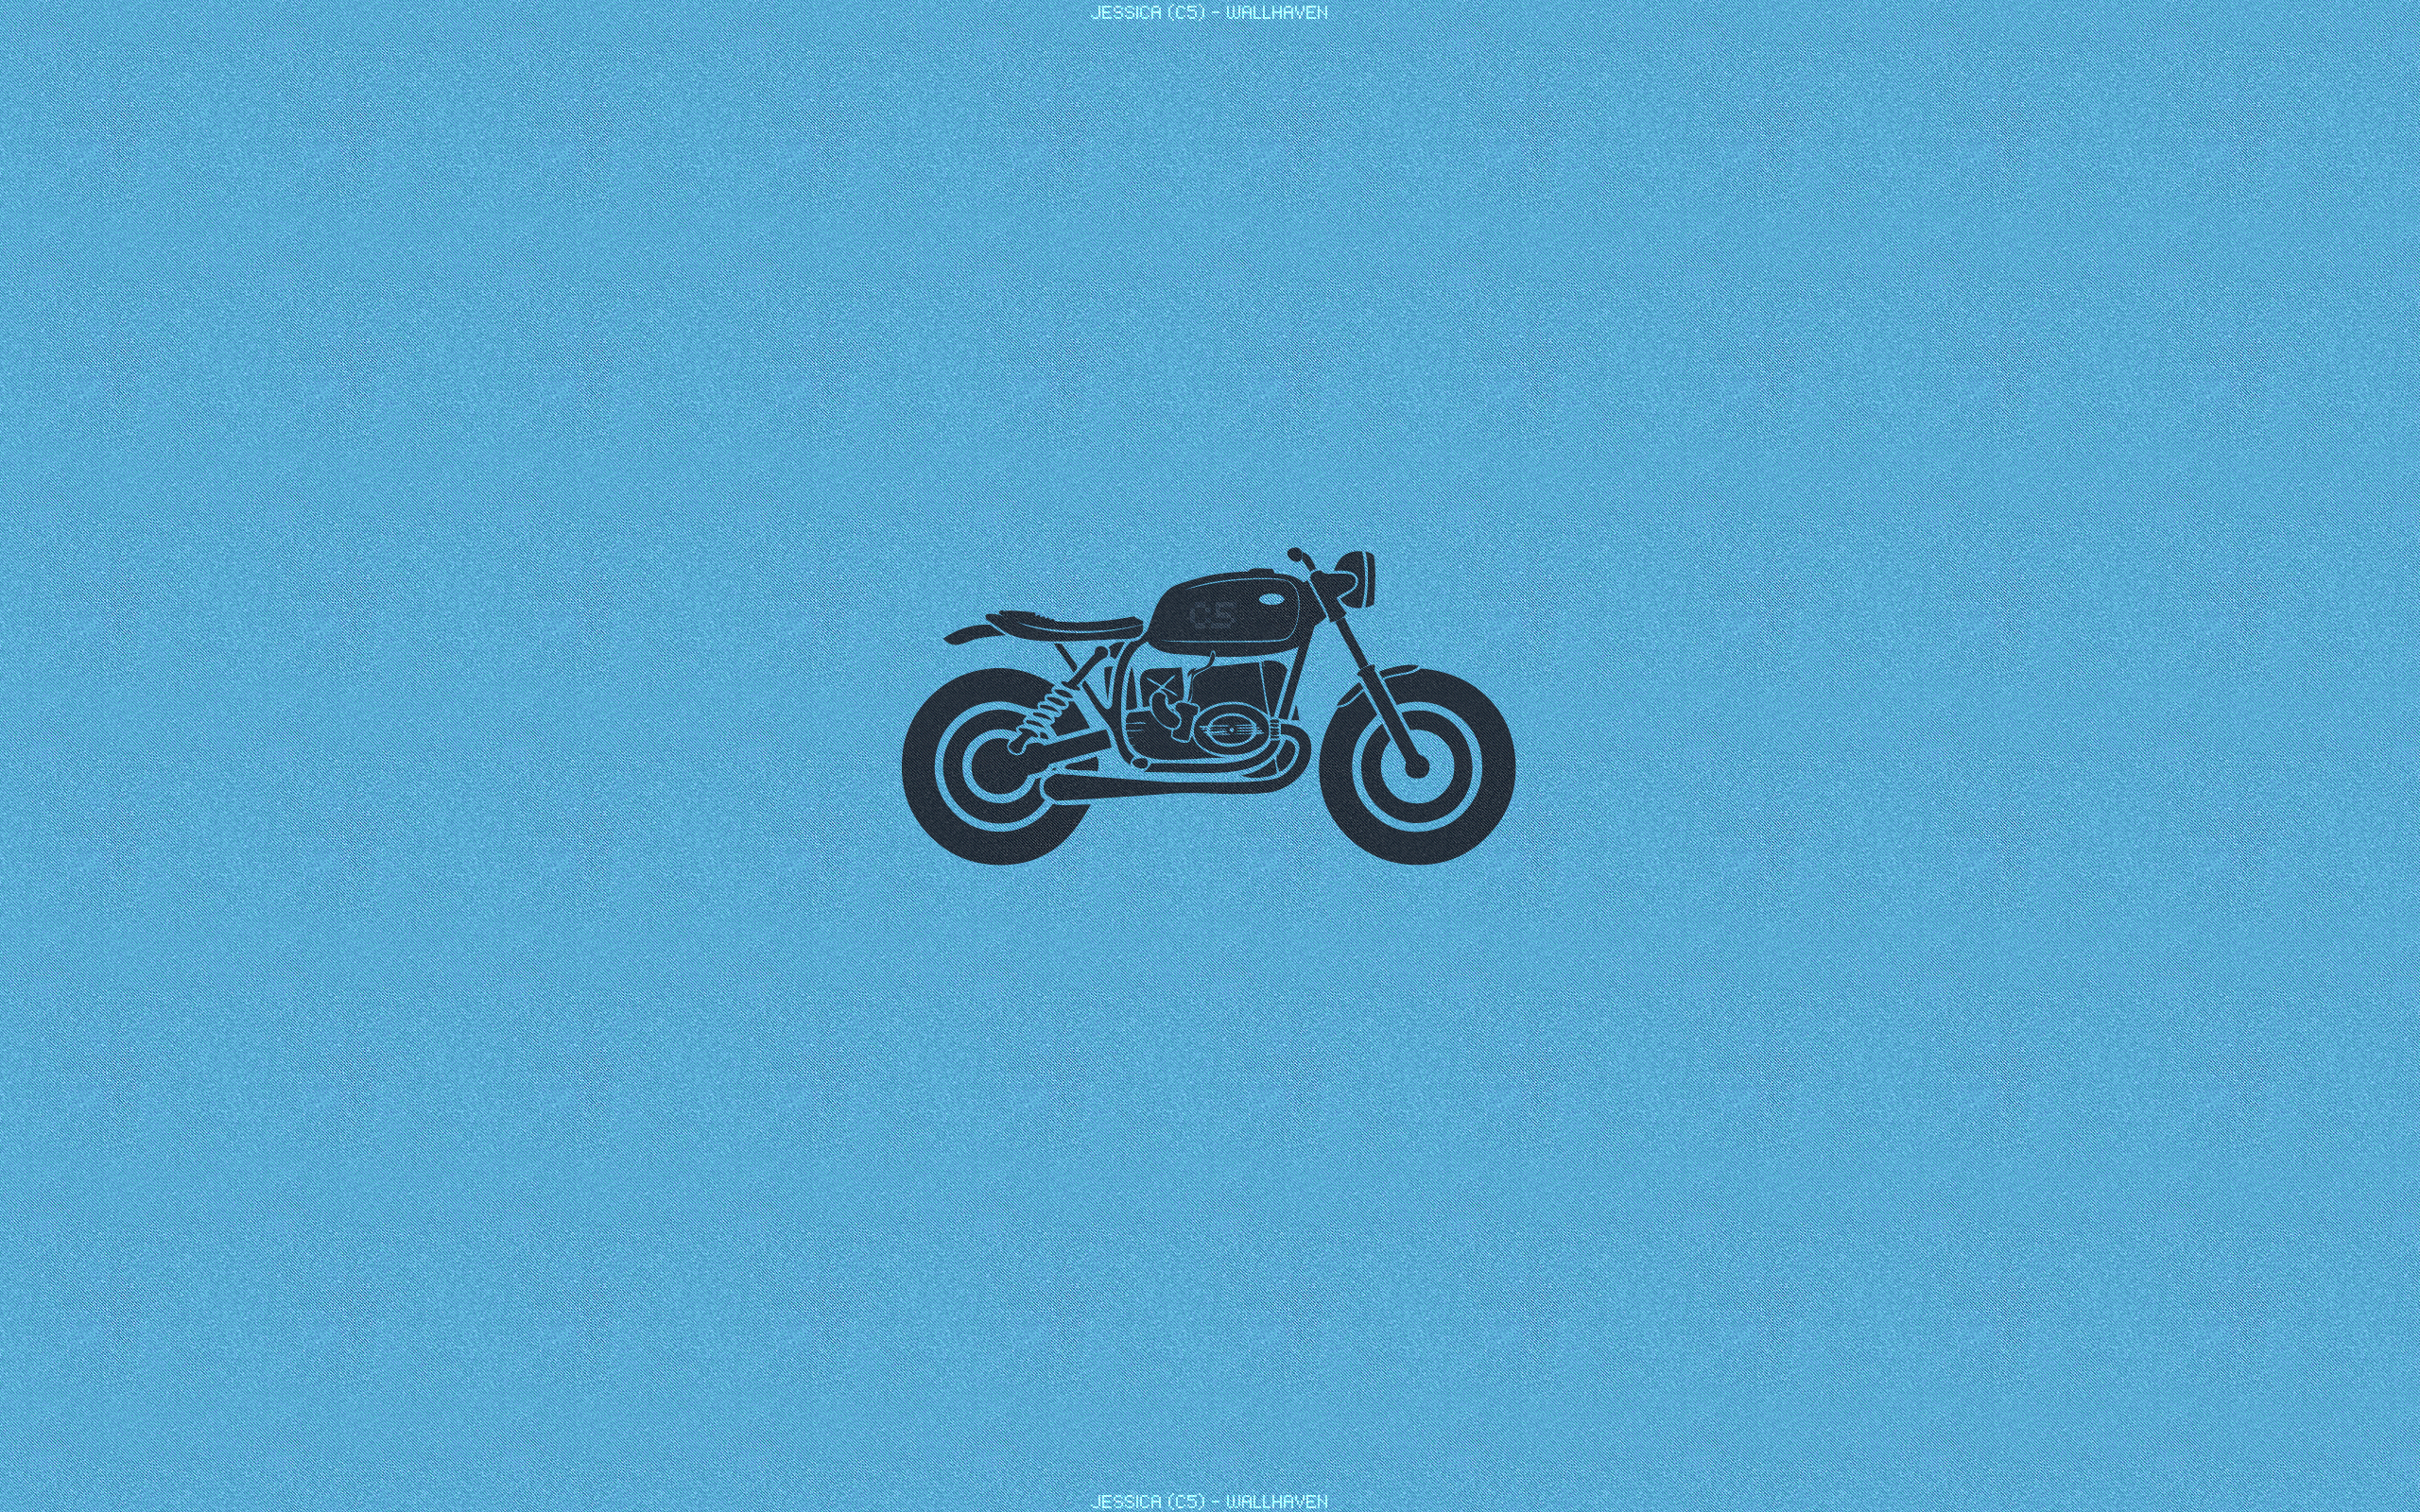 мотоцикл, минимализм, голубой фон, креативные обои, Motorcycle, minimalism, blue background, creative wallpaper